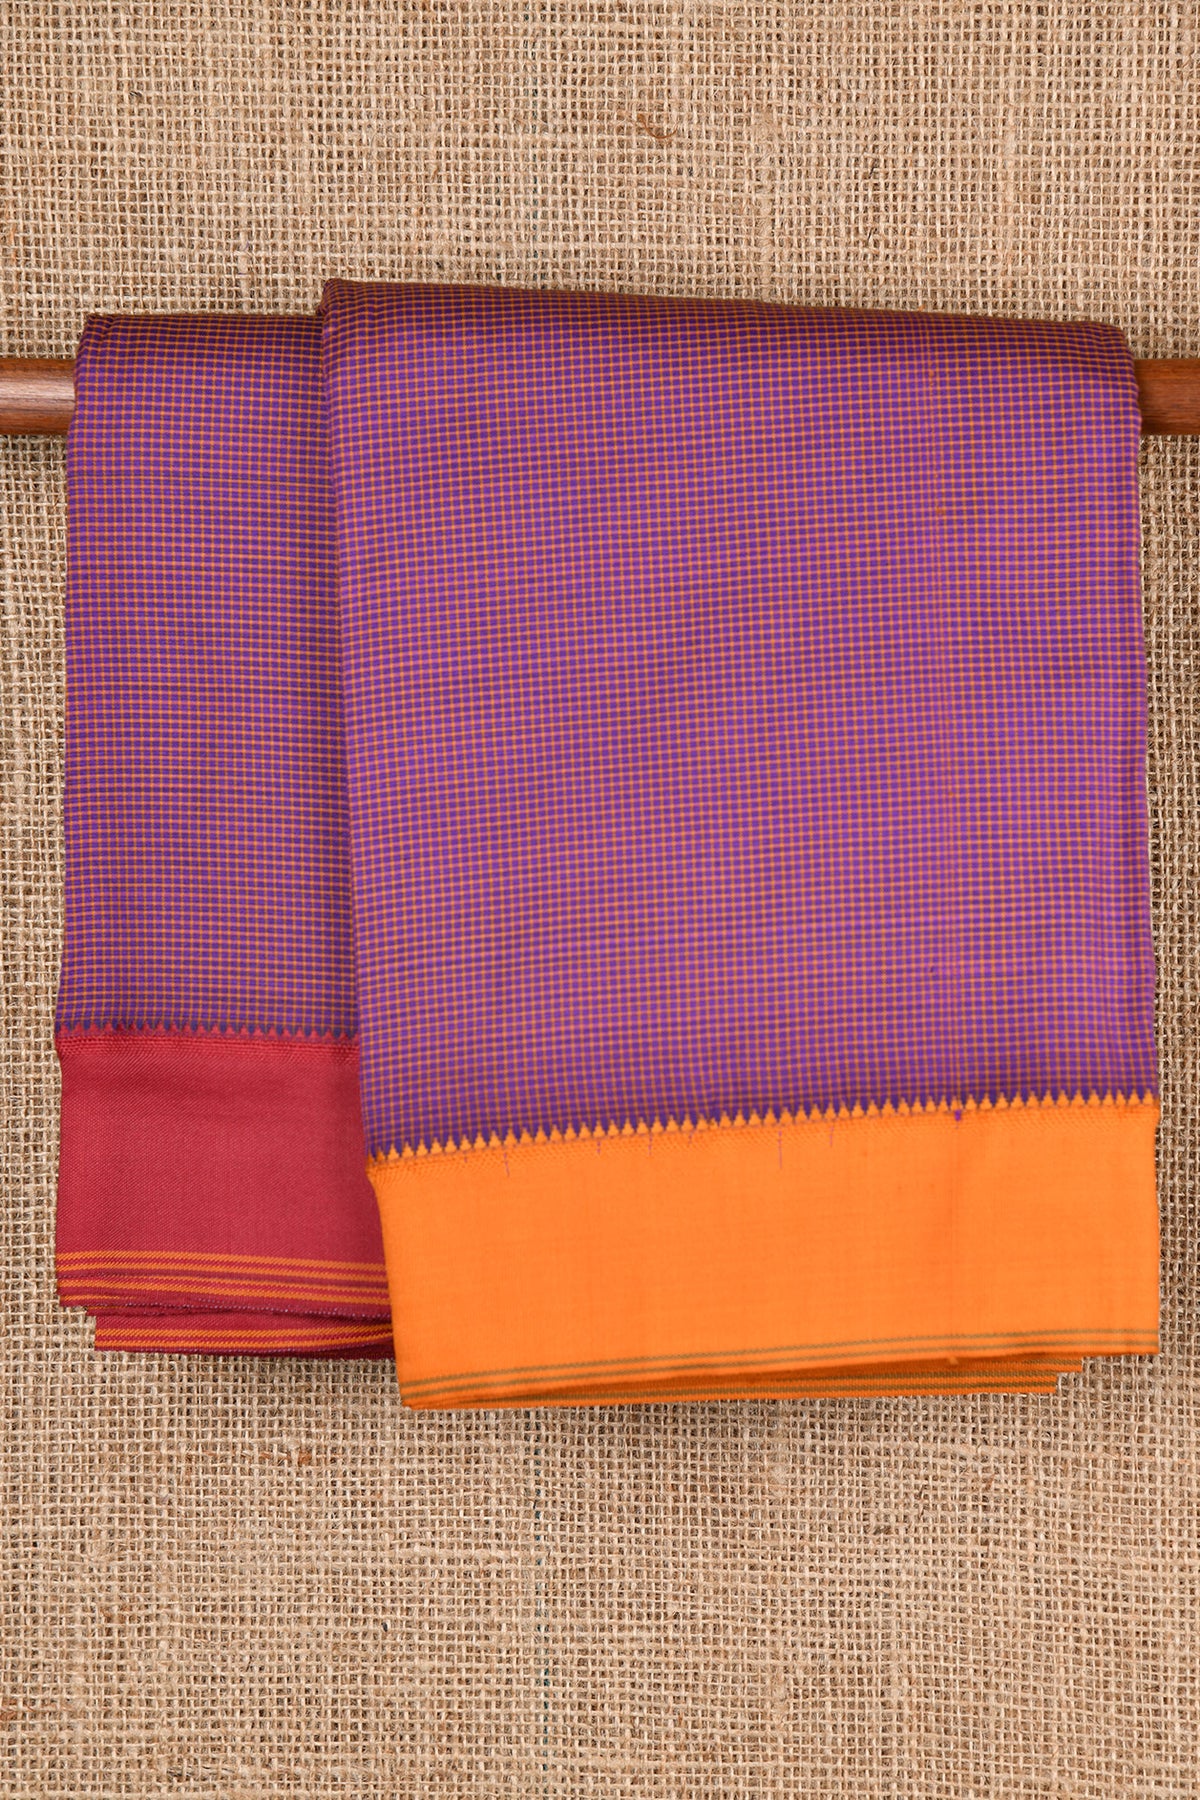 Checked Design Ganga Jamuna Border Violet Dharwad Cotton Saree